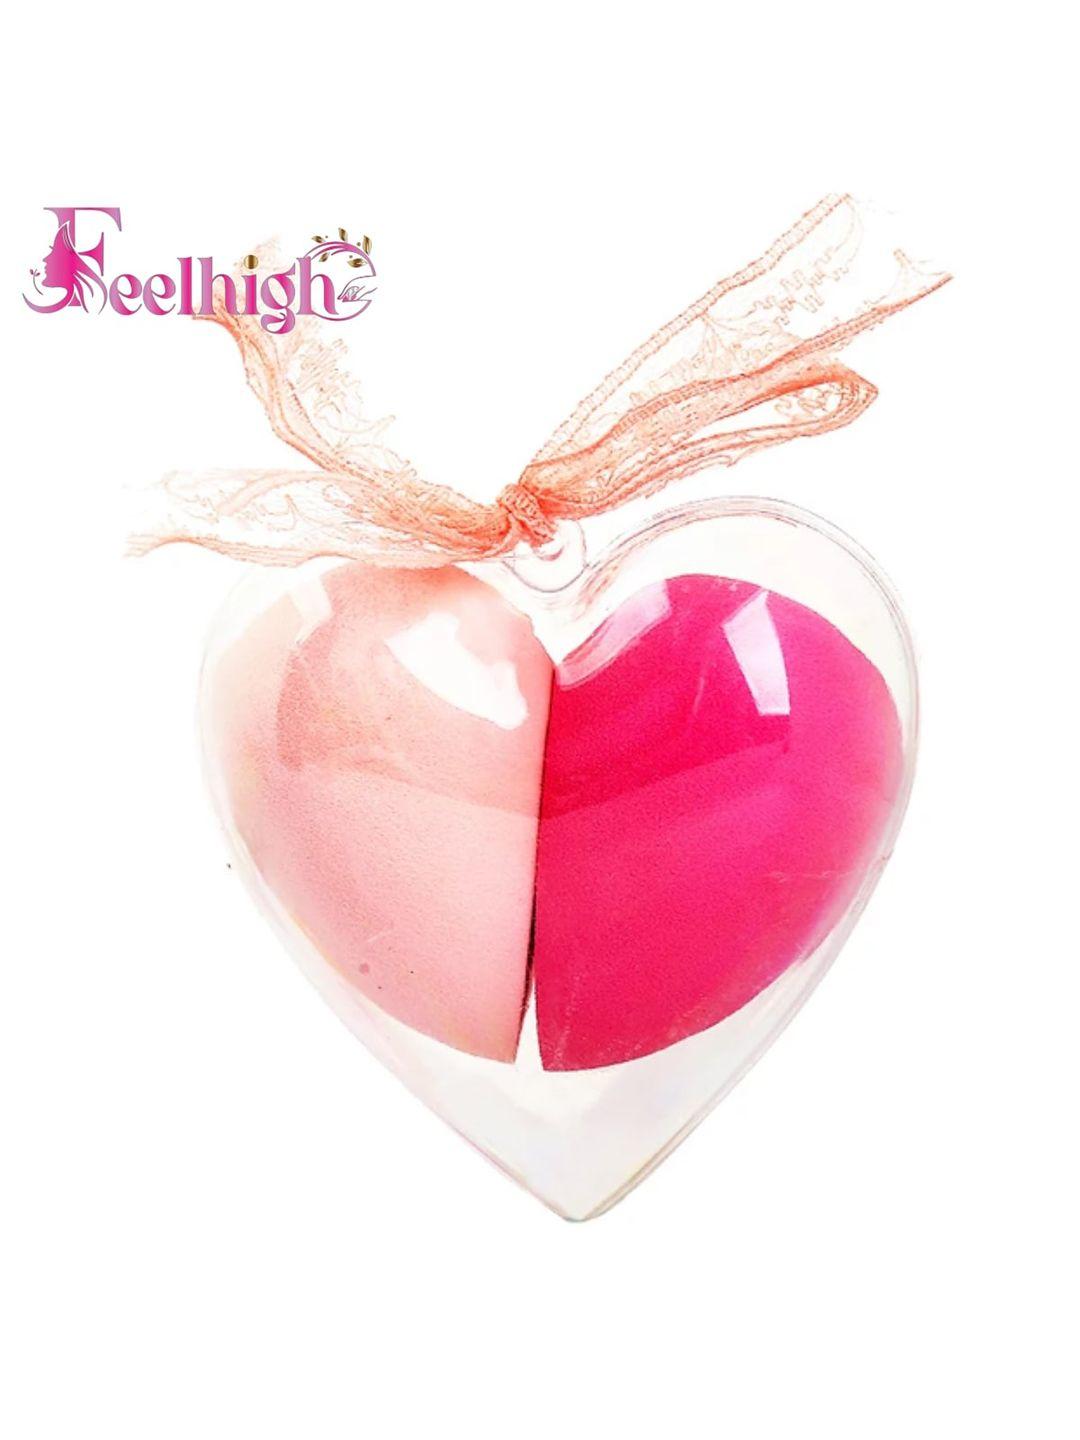 feelhigh 2-pcs heart shape beauty blenders puff set with storage box